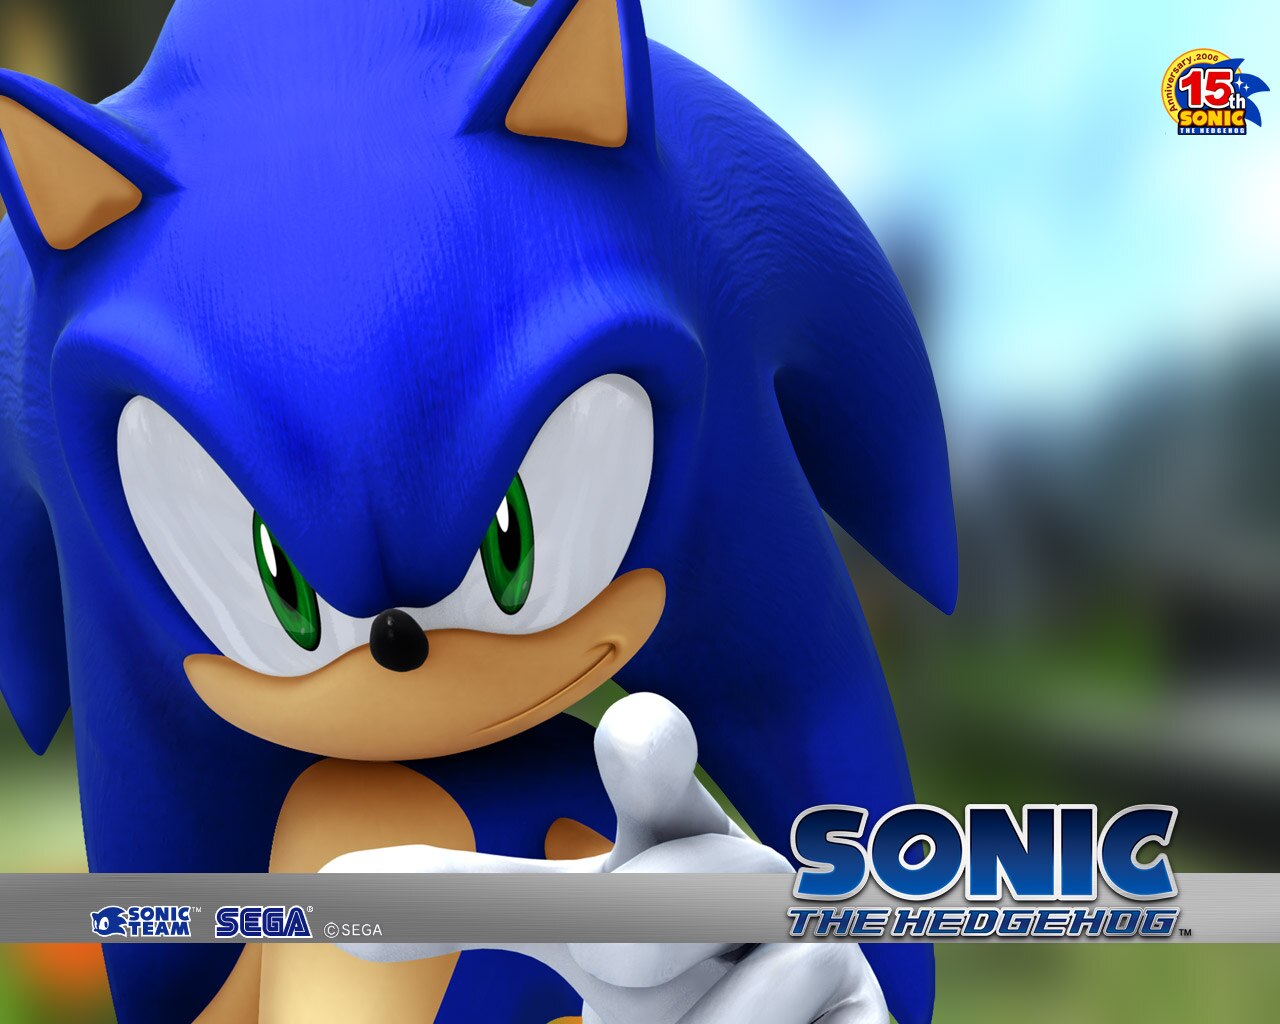 Steam Workshop::Hyper Sonic in Sonic 2